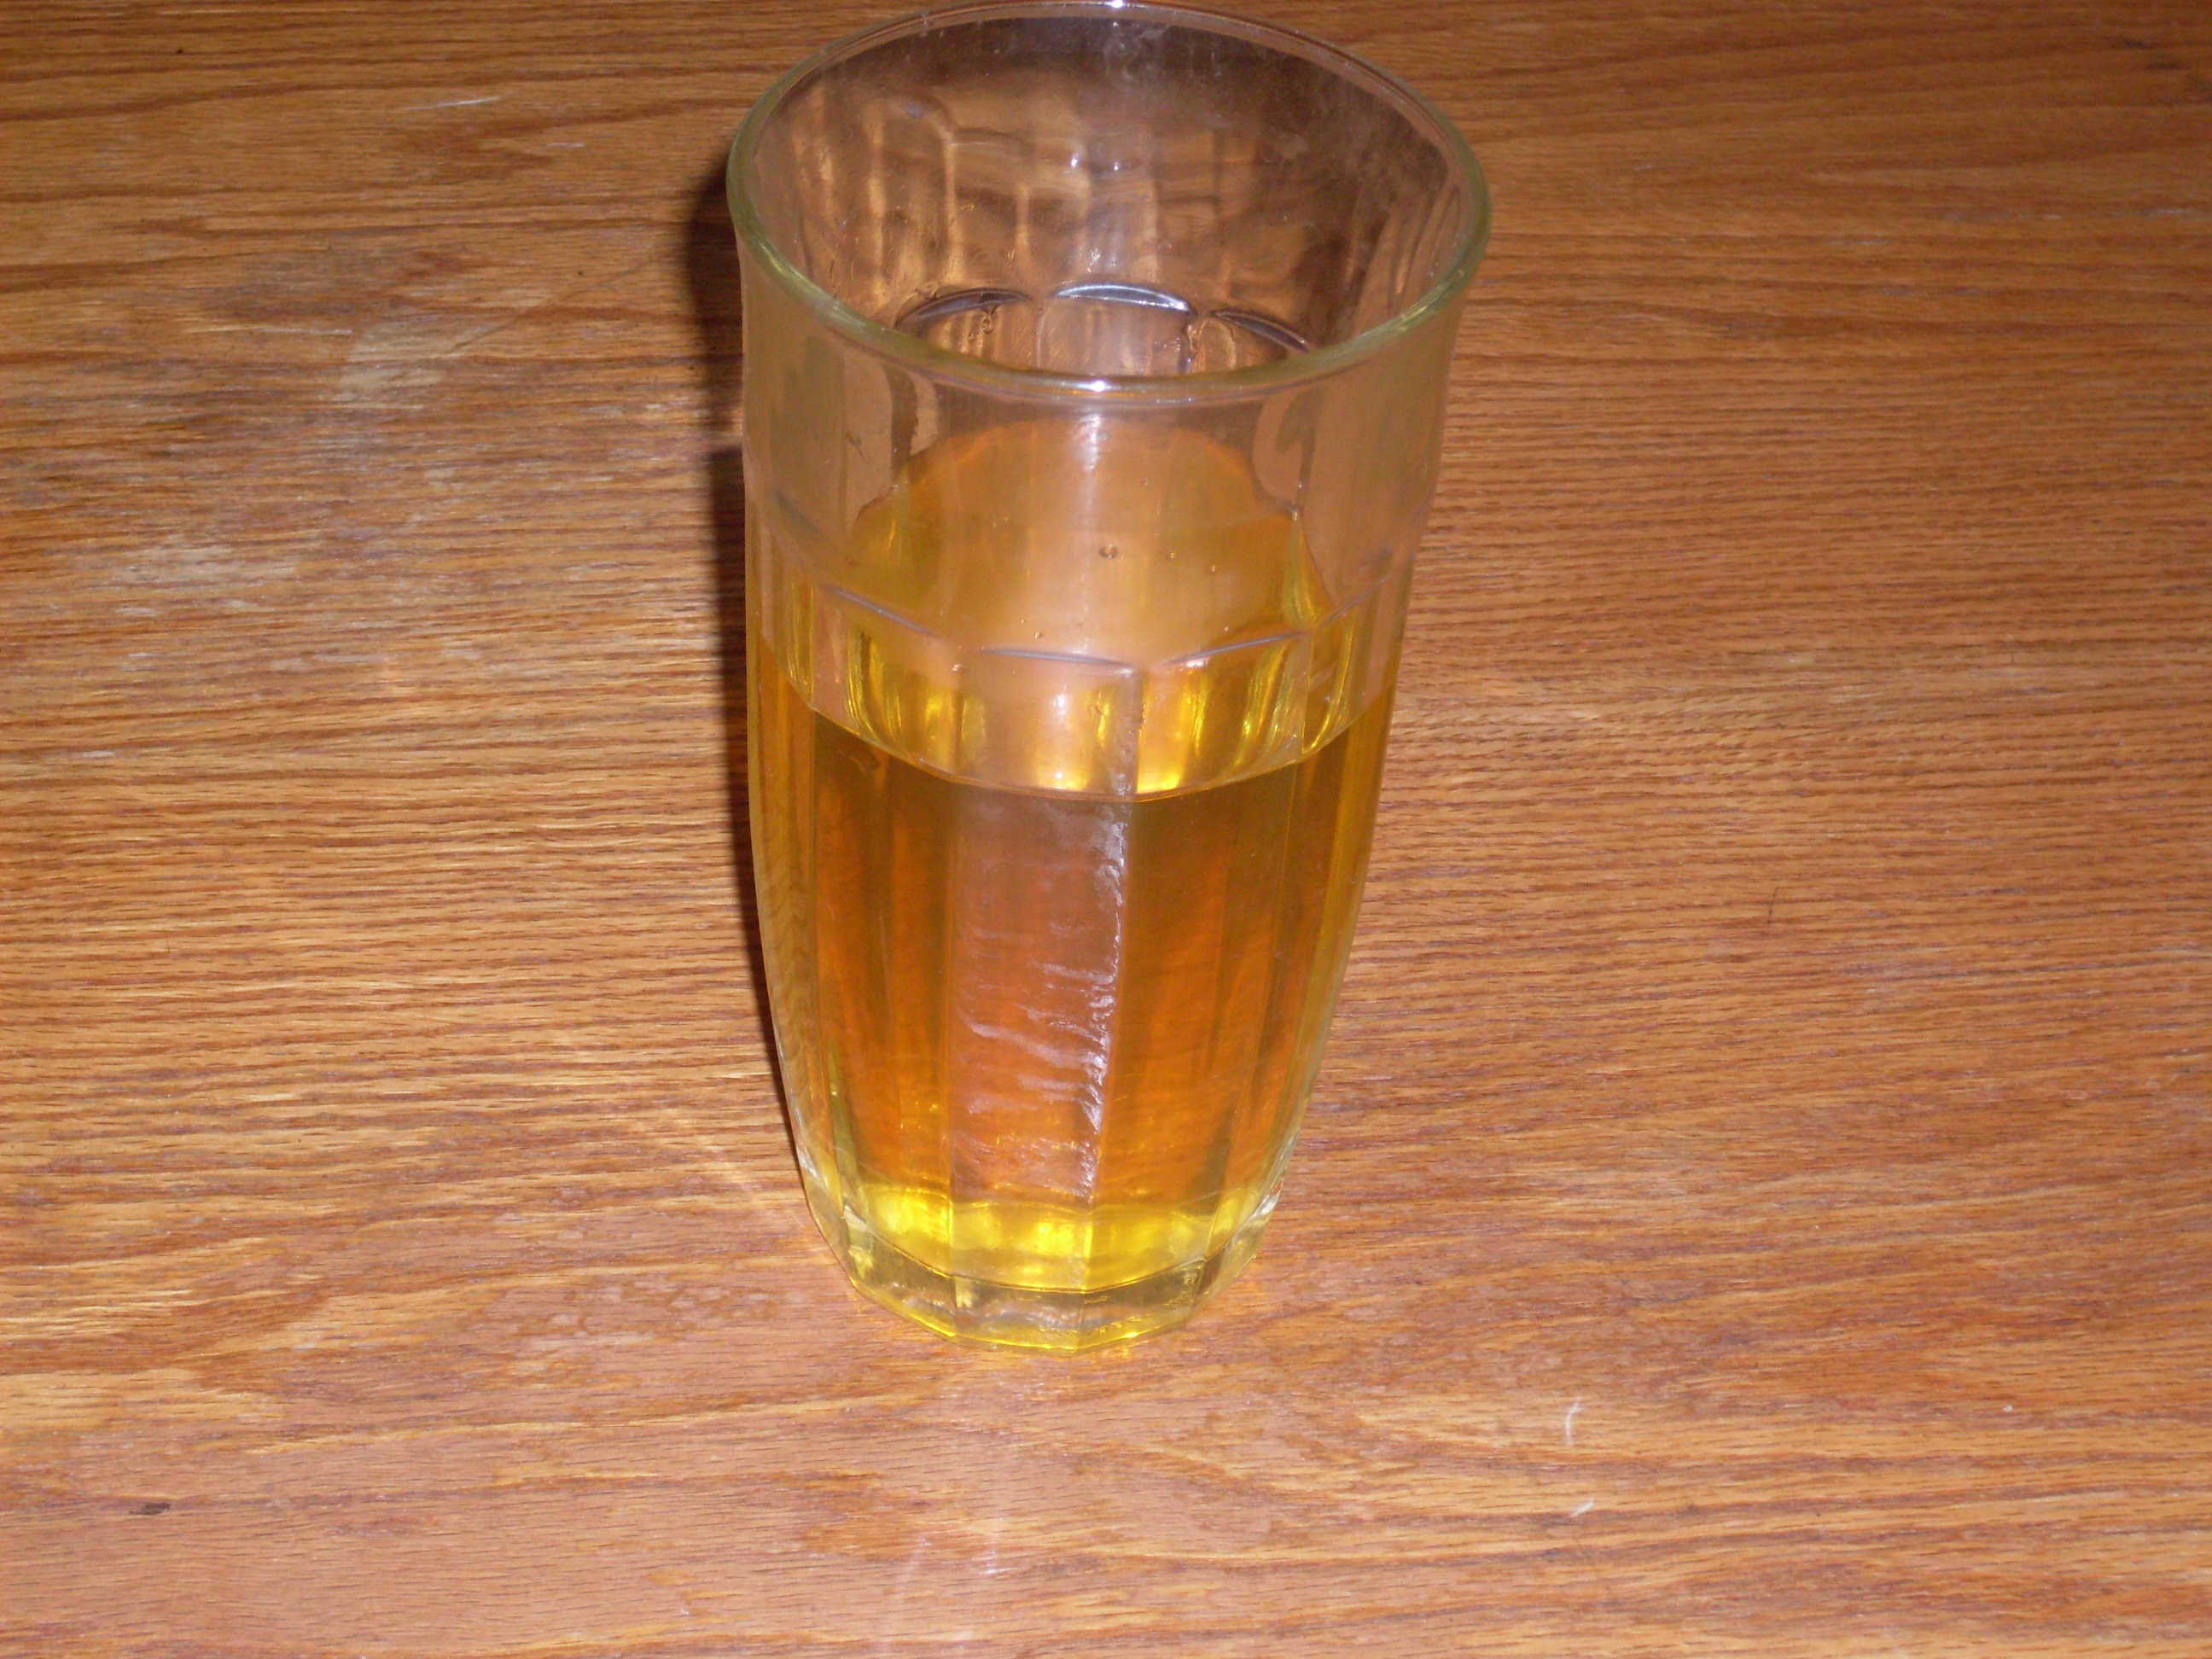 A glass of urine